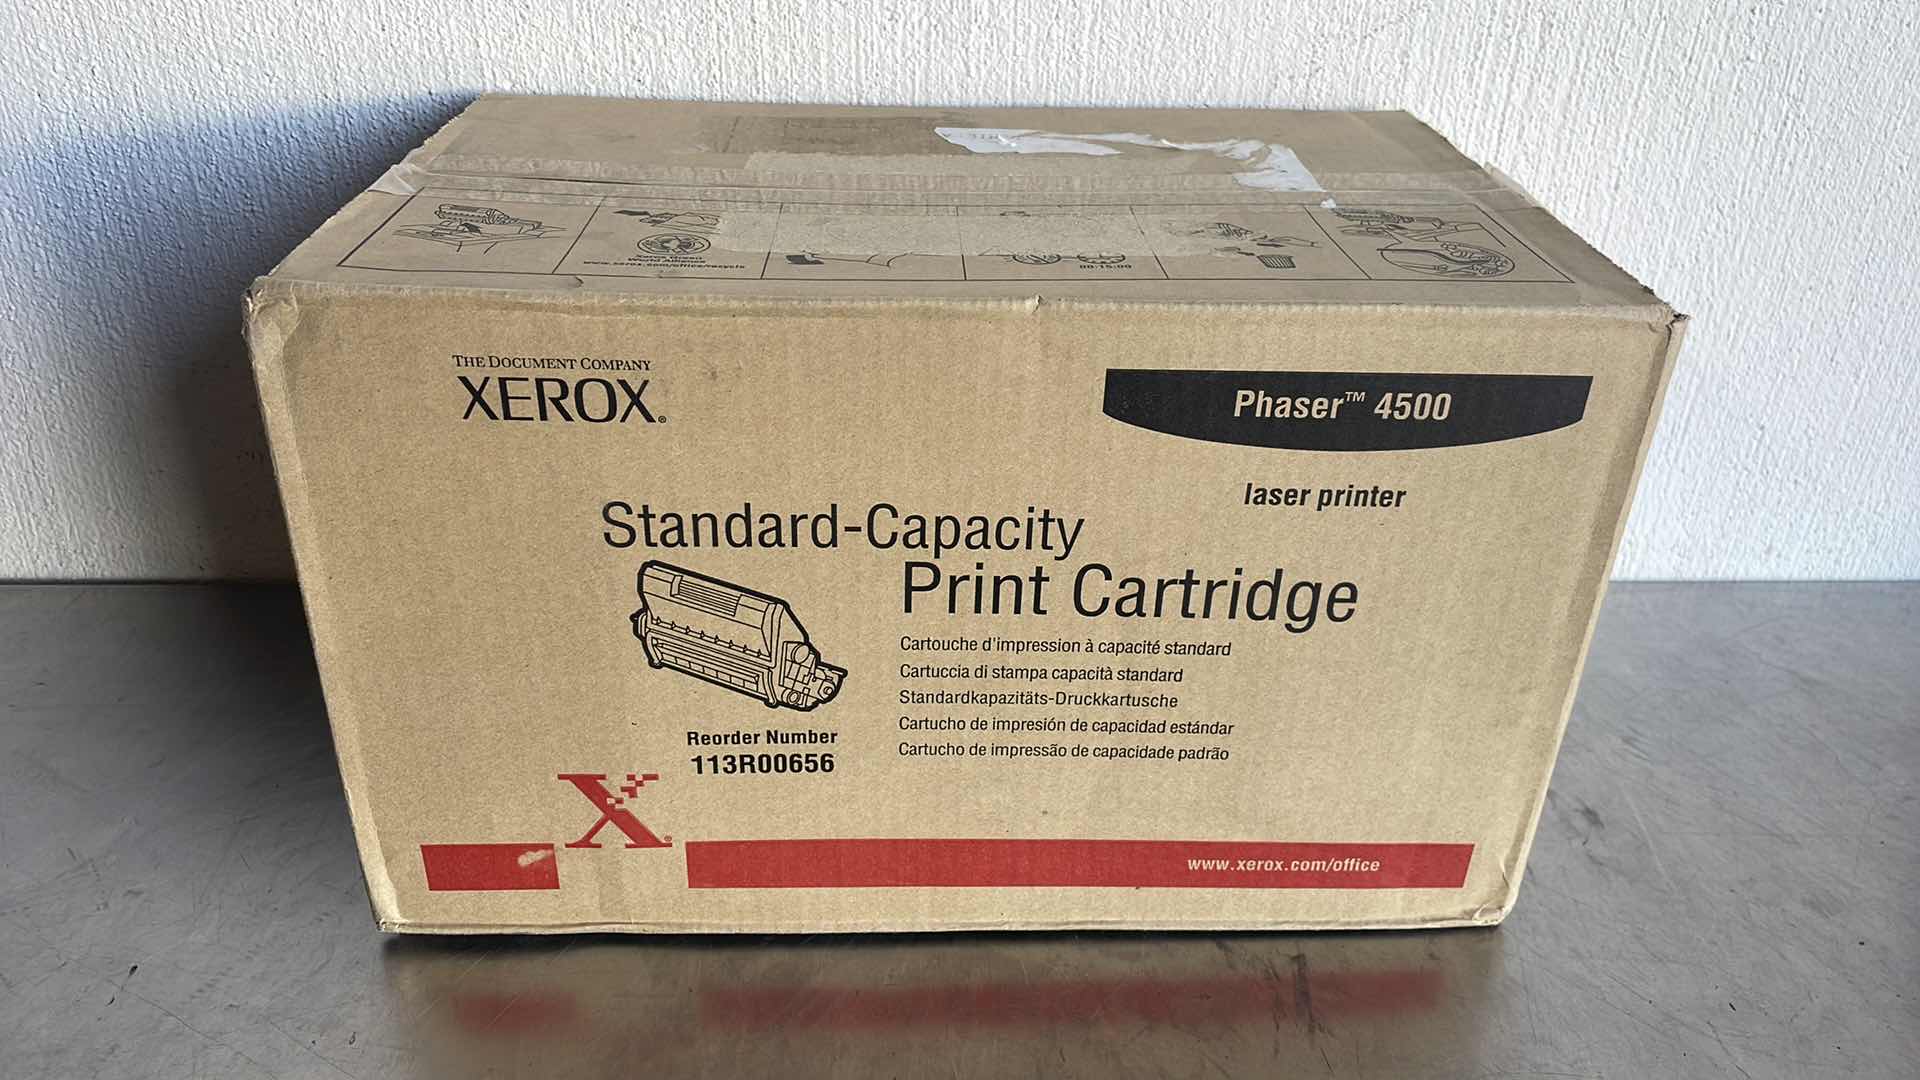 Photo 1 of XEROX STANDARD-CAPACITY PRINT CARTRIDGE PHASER4500 LASER PRINTER 
REORDER NUMBER 113R00656